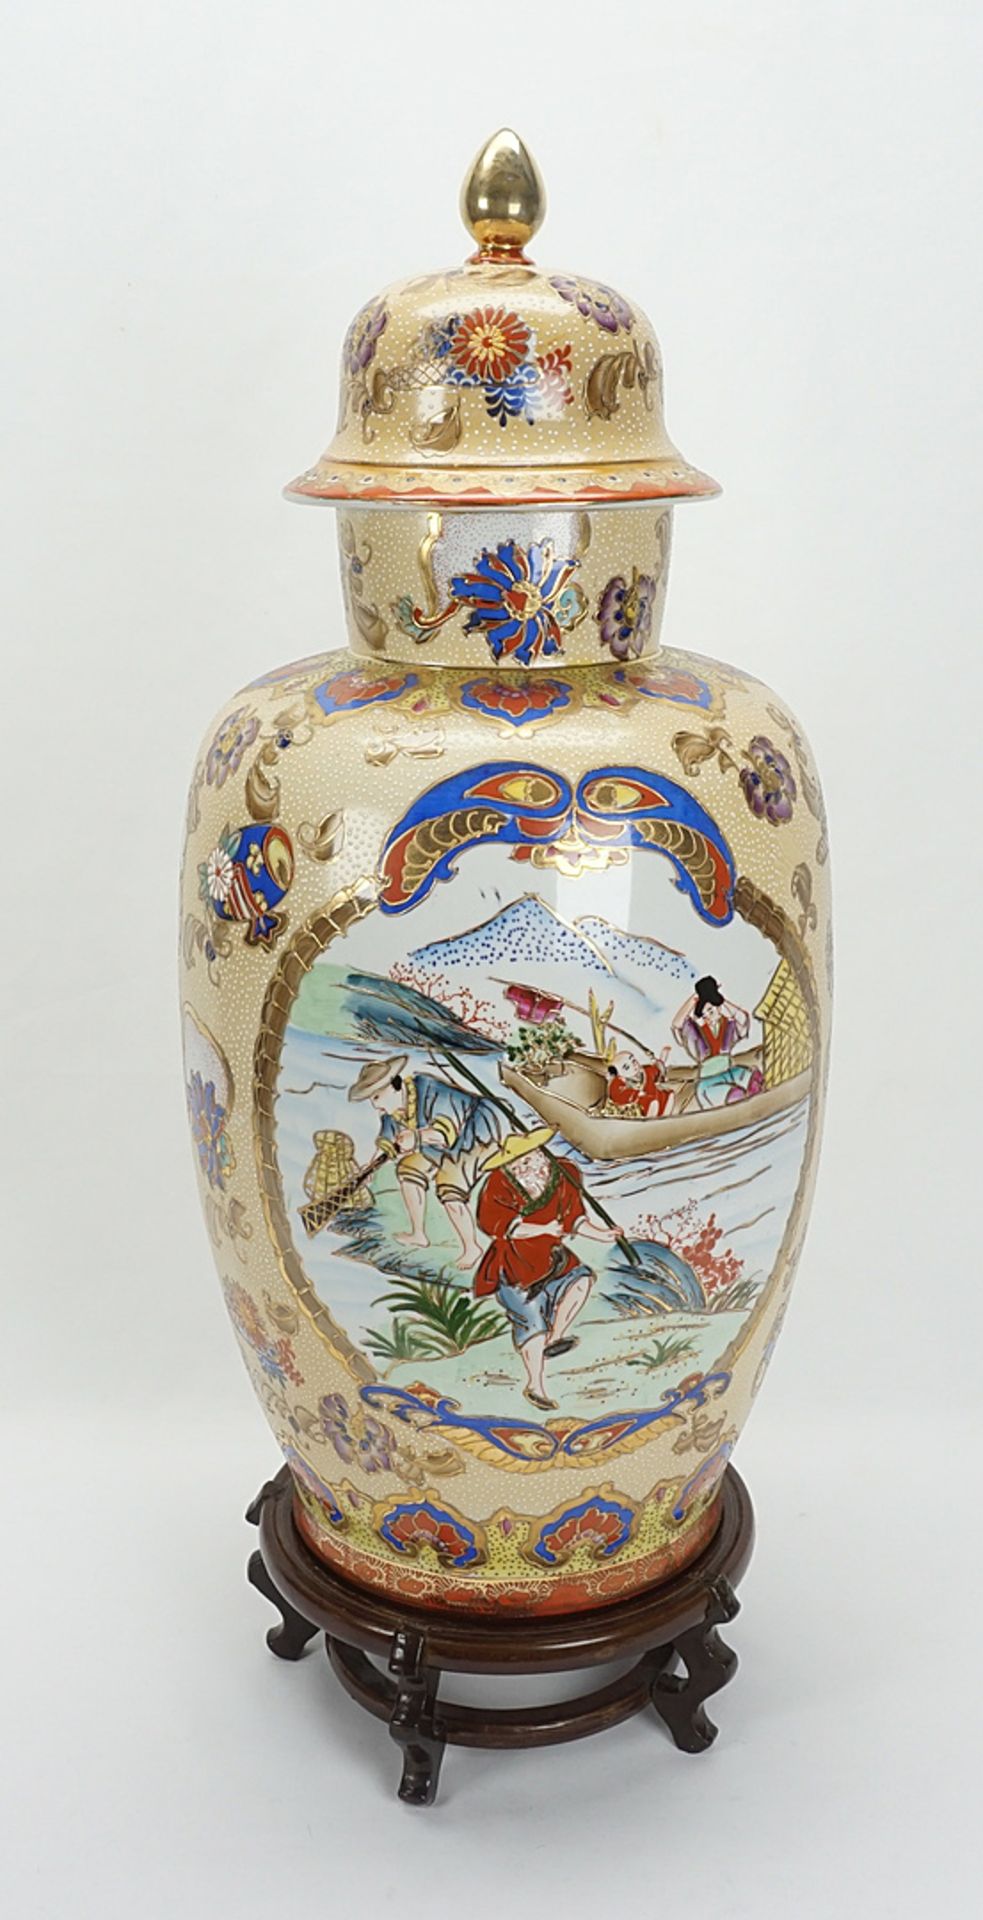 Floor vase, China, 20th century - Image 3 of 5